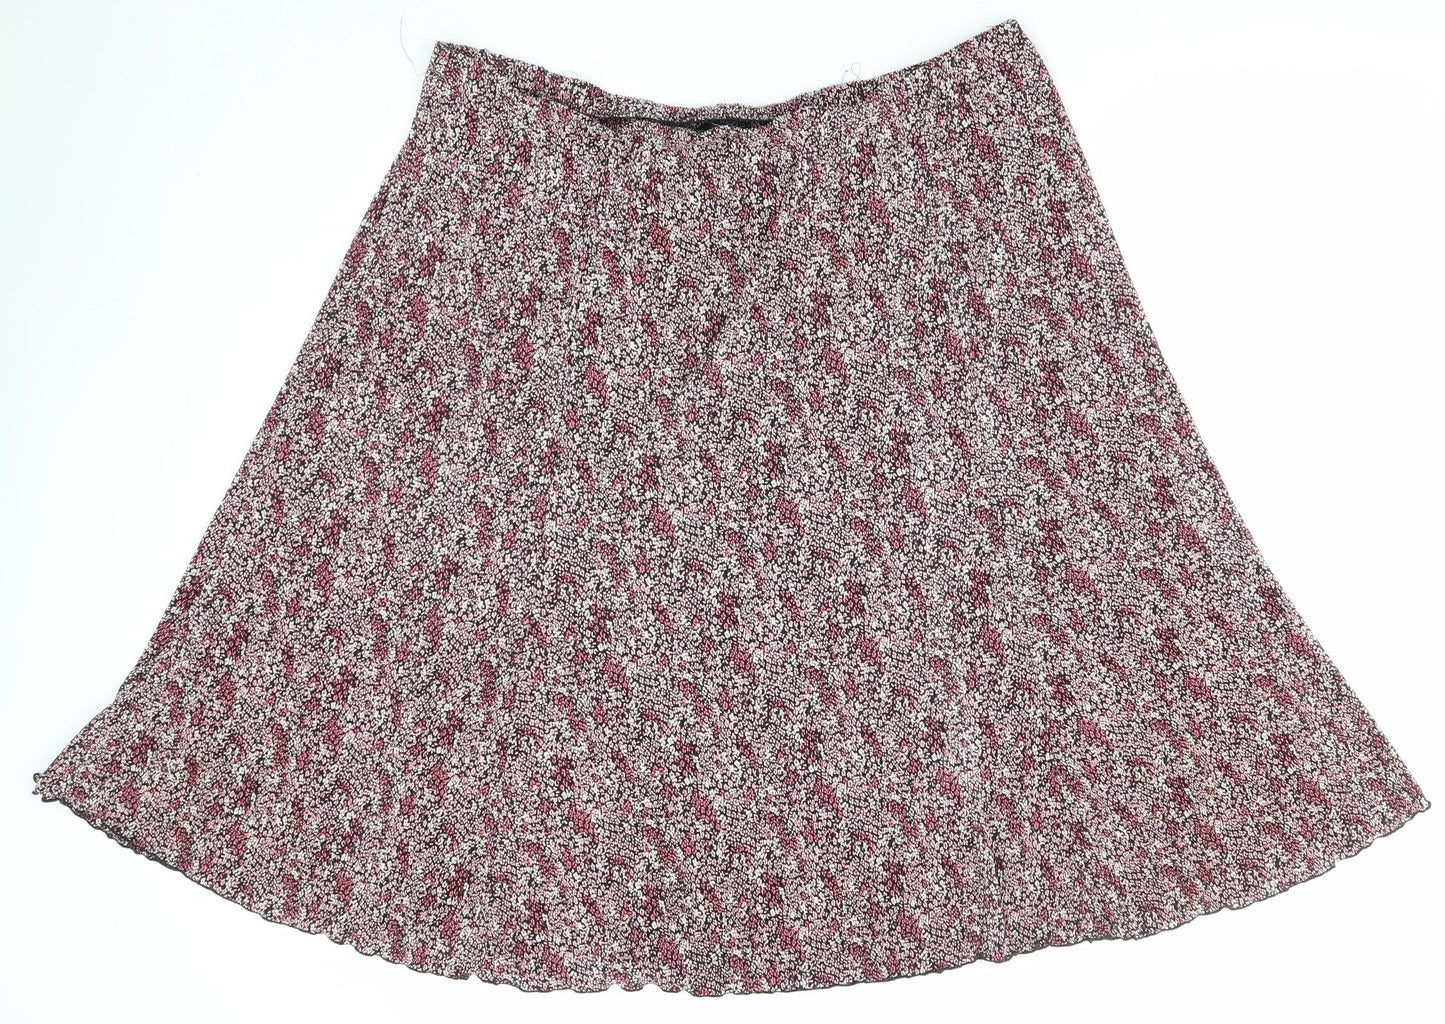 Bonmarché Womens Multicoloured Geometric Polyester Swing Skirt Size 24